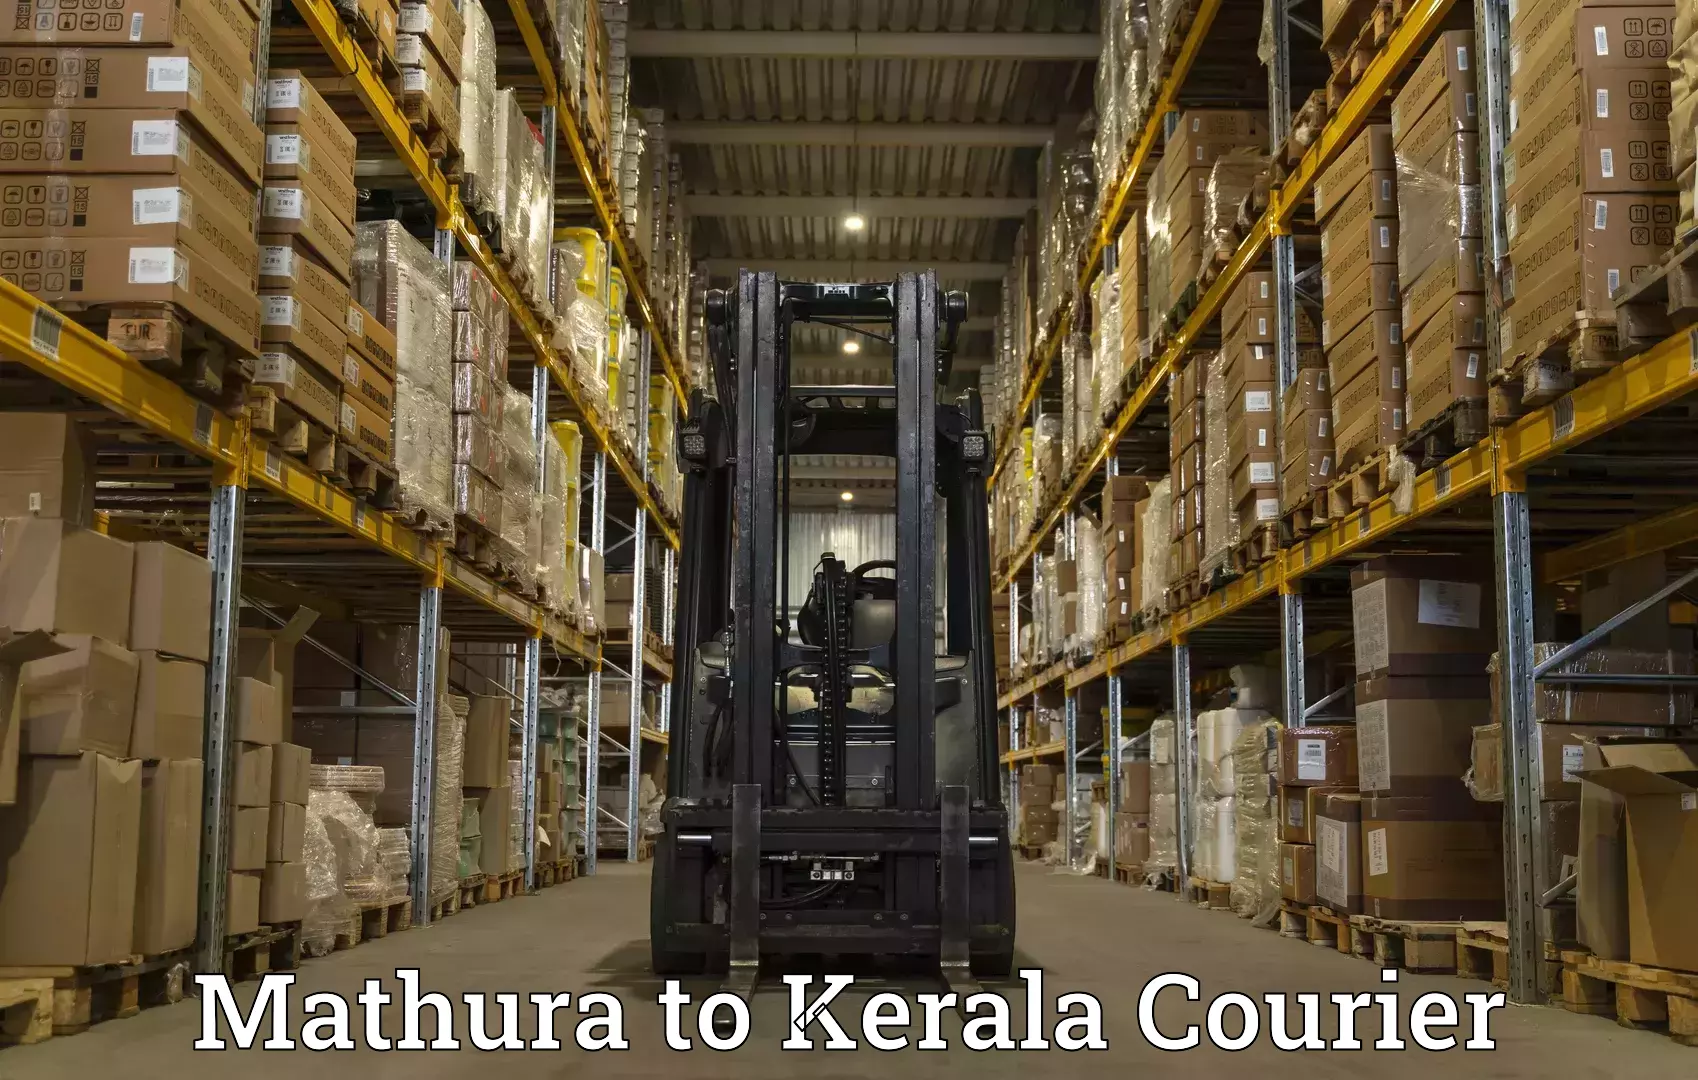 International parcel service Mathura to Kerala